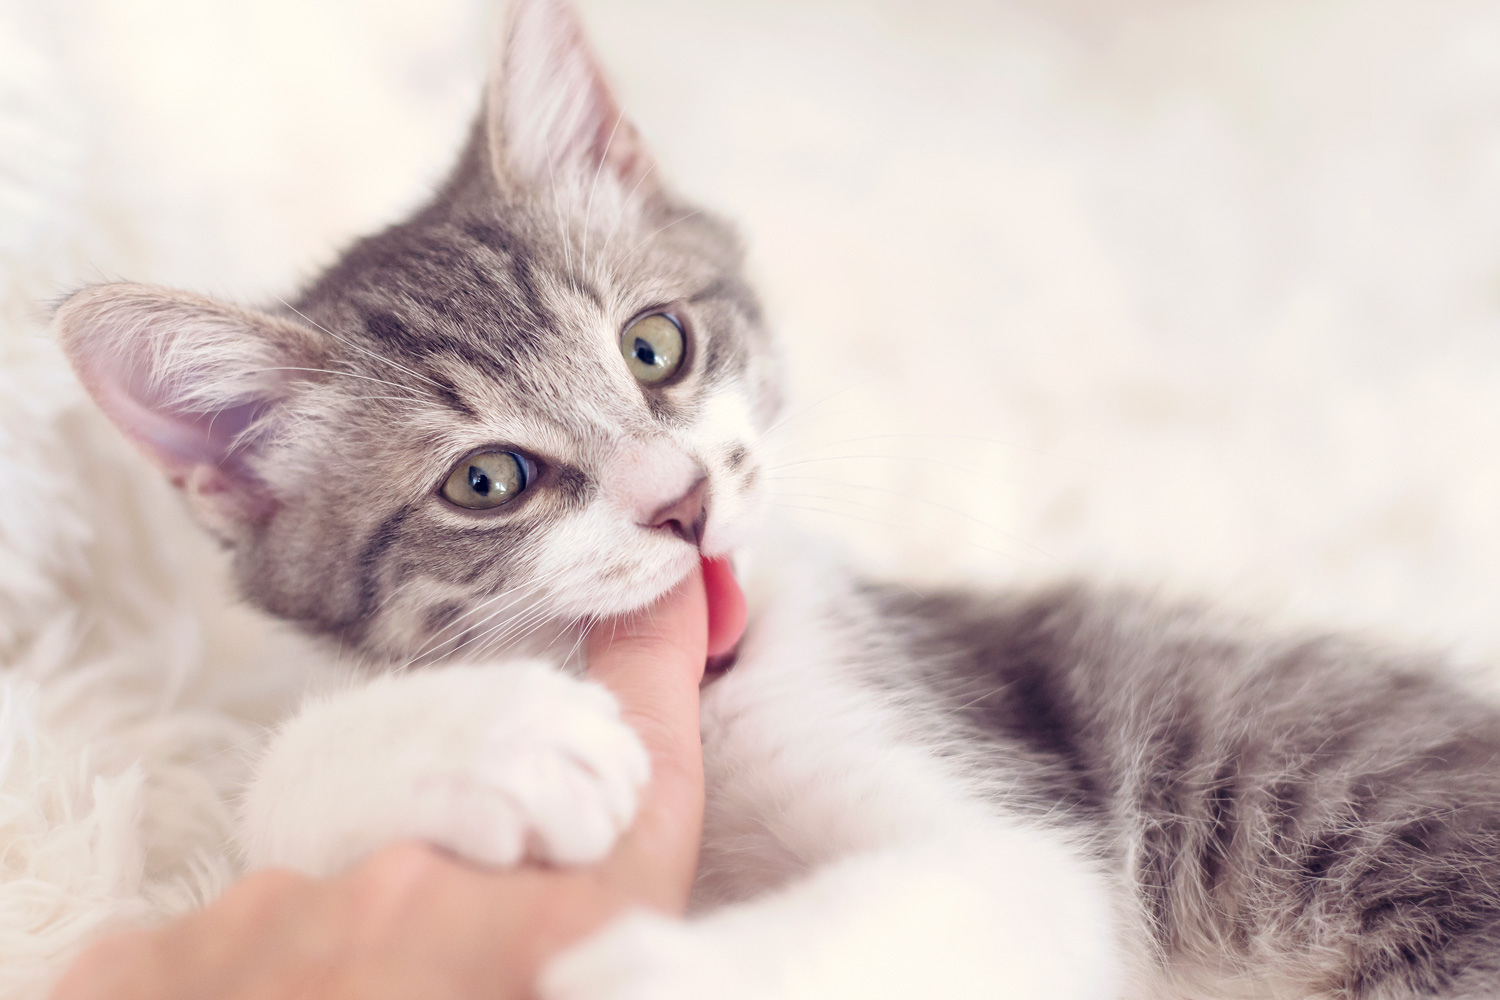 A gorgeous little kitten biting its owner's finger